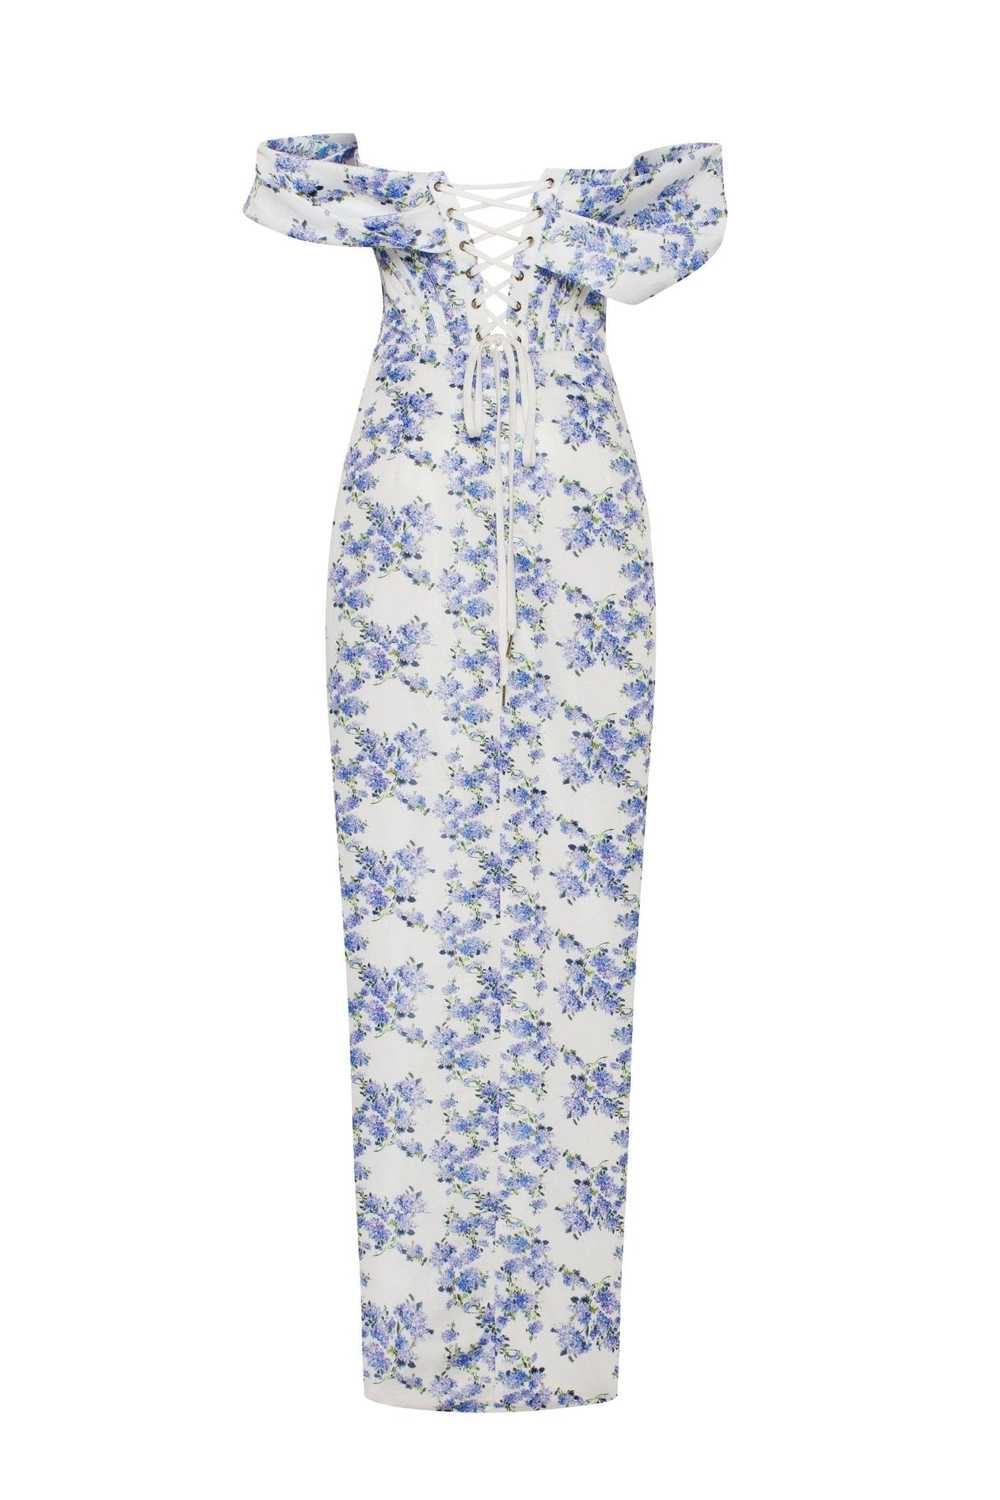 Milla Blue Hydrangea off-shoulder satin dress - image 3